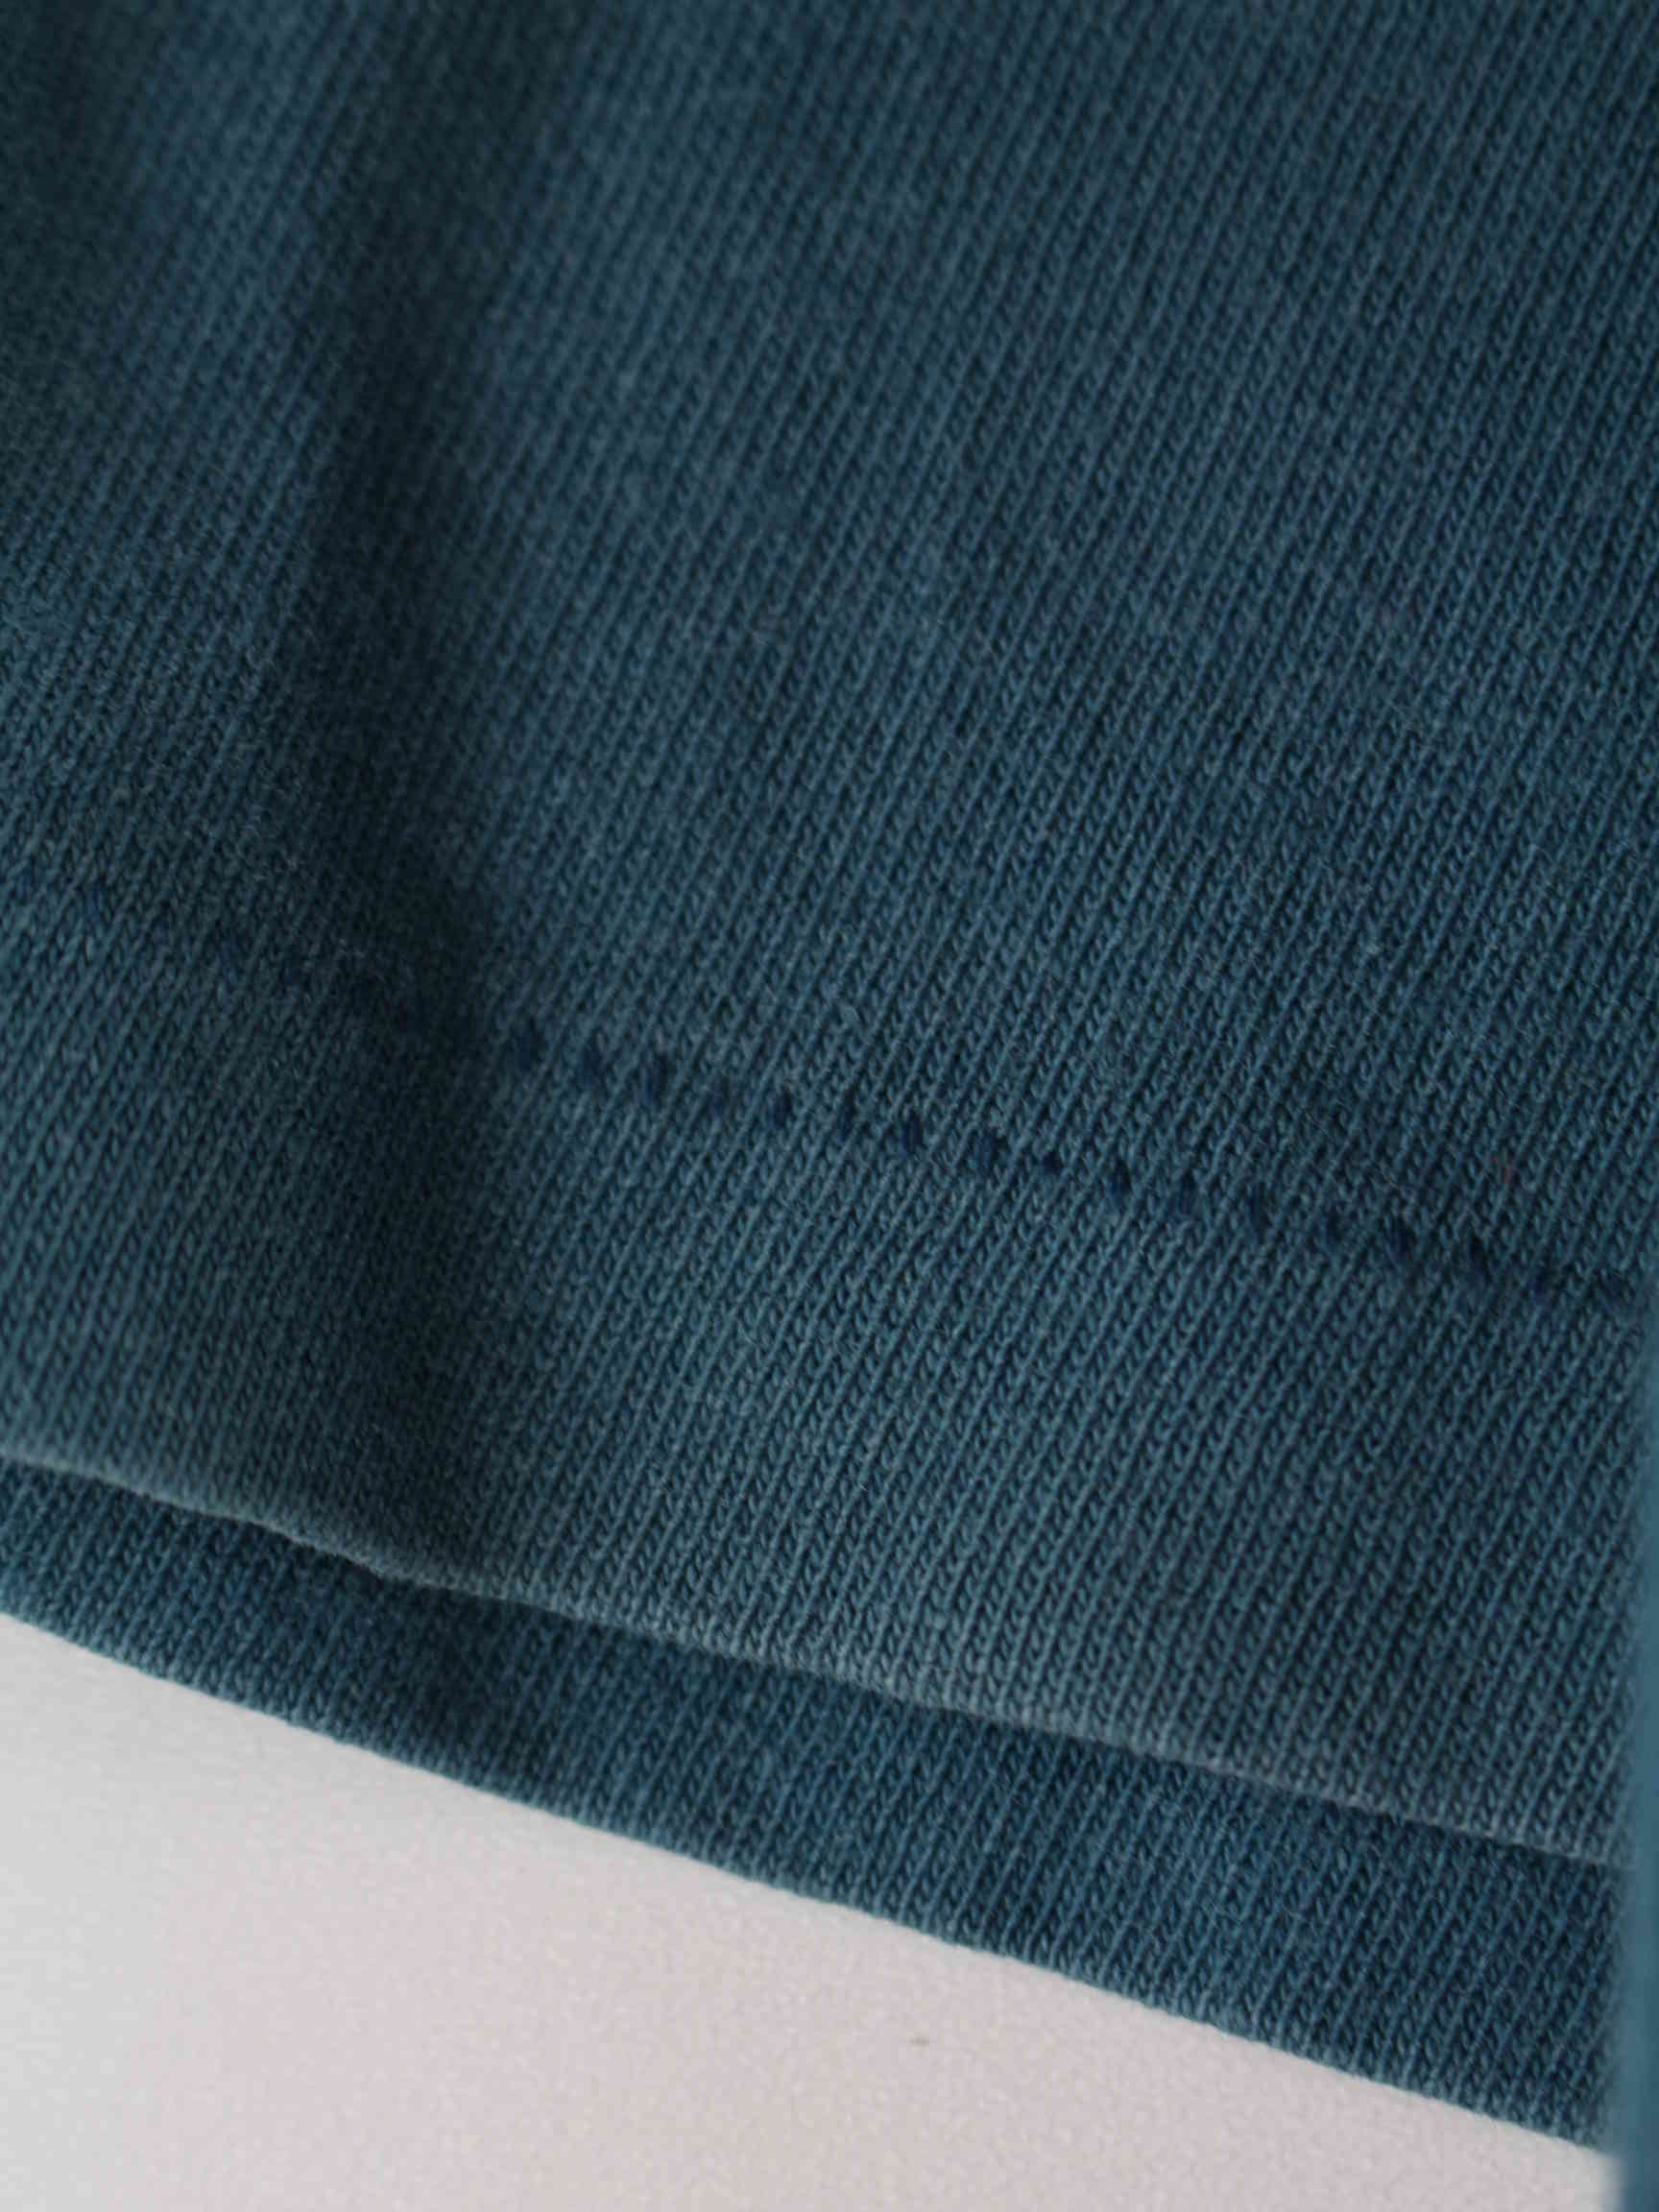 Harley Davidson 1995 Vintage Faded Print Single Stitched T-Shirt Blau XL (detail image 4)